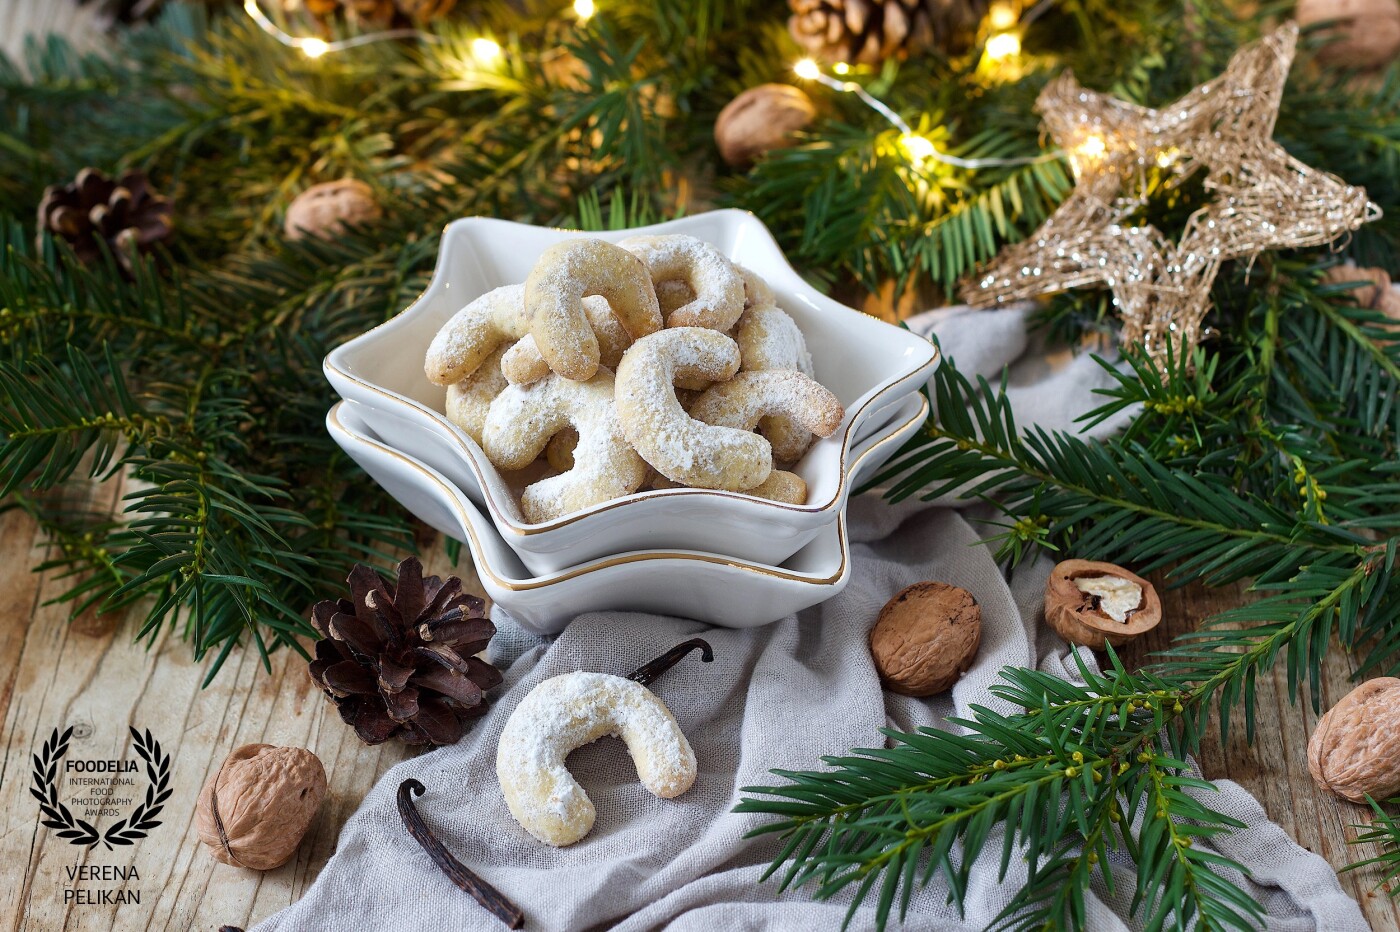 Vanilla Crescent Cookies, traditional Austrian Christmas cookies.<br />
Recipe can be found on my website: sweetsandlifestyle.com/rezept/vanillekipferl